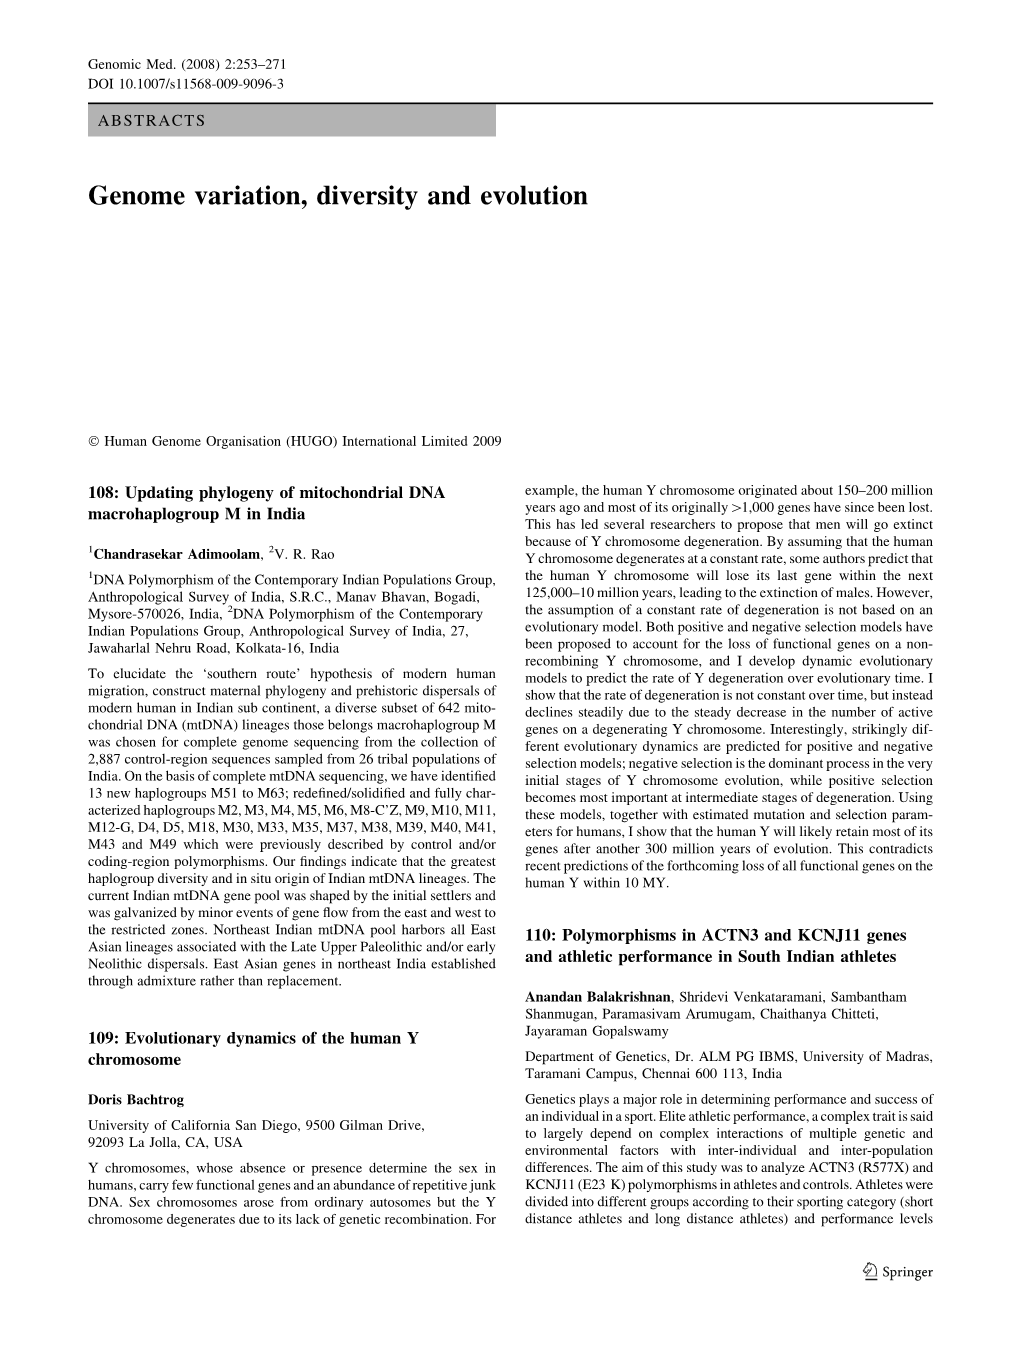 Genome Variation, Diversity and Evolution